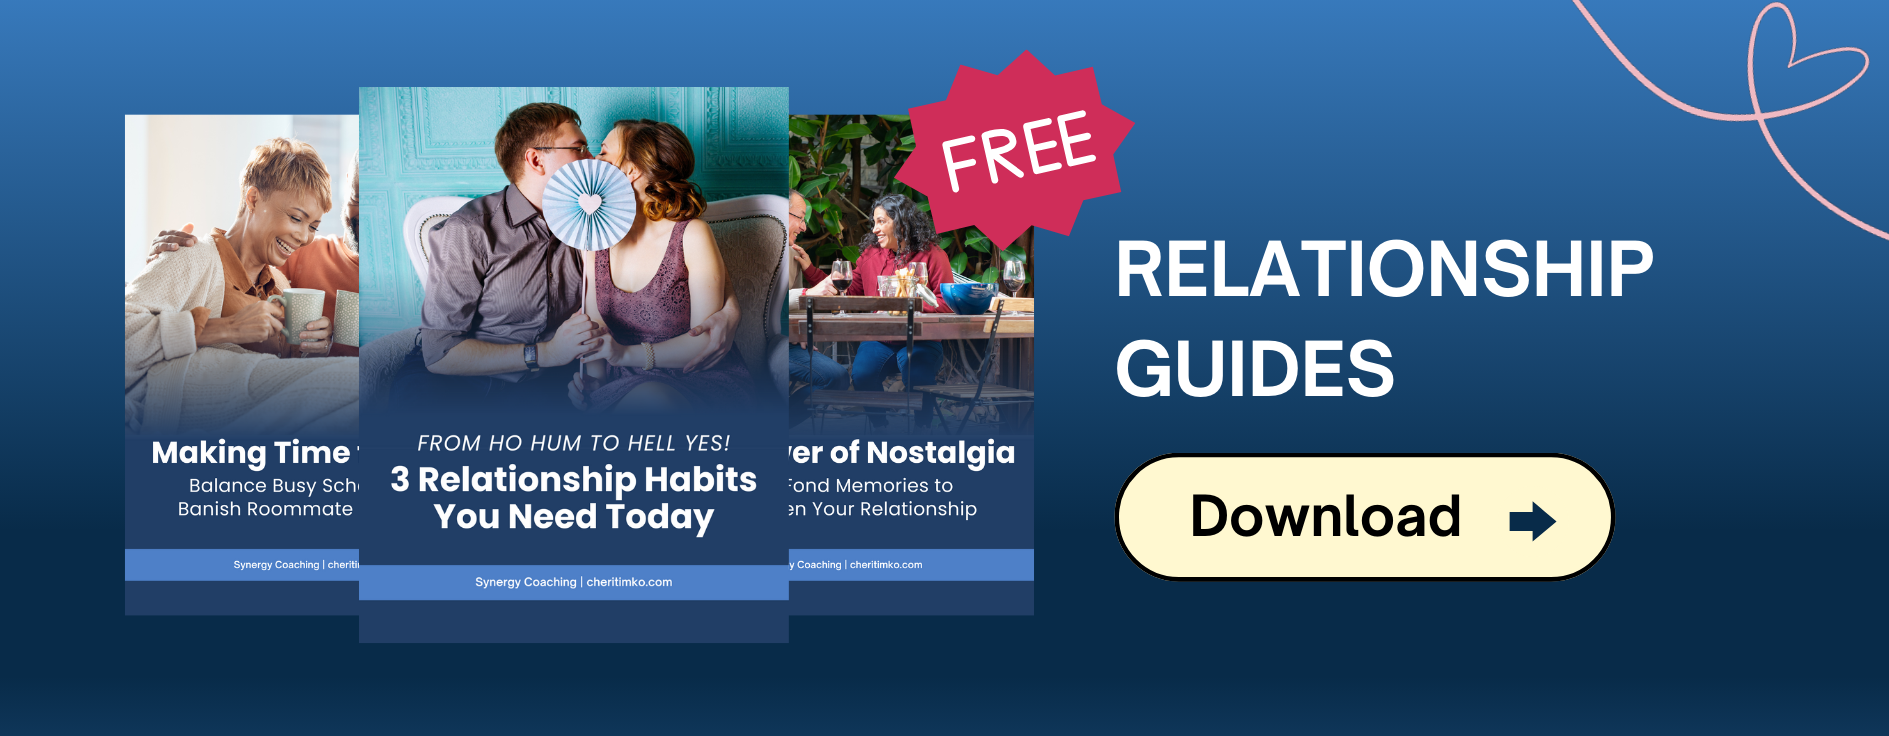 Free Relationship Guides e1707778012971